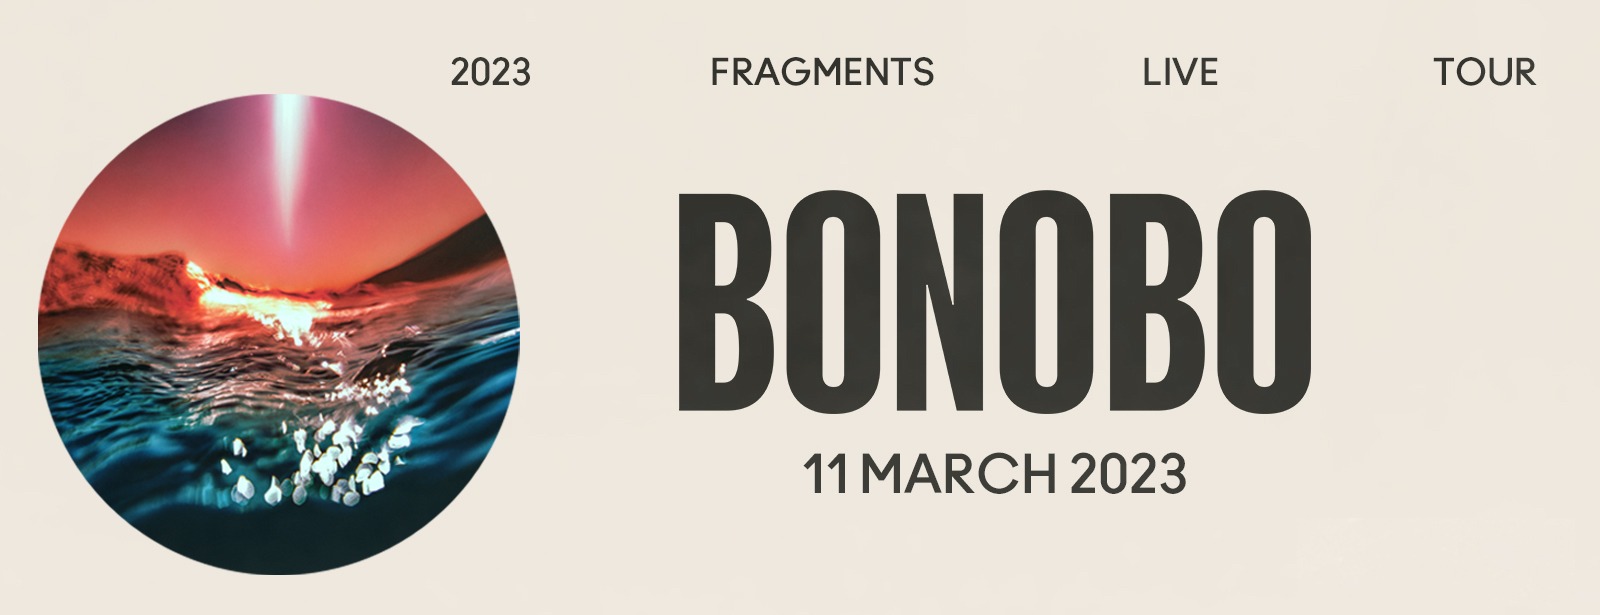 Bonobo Fragments Tour 2023 at Dubai Opera - Coming Soon in UAE